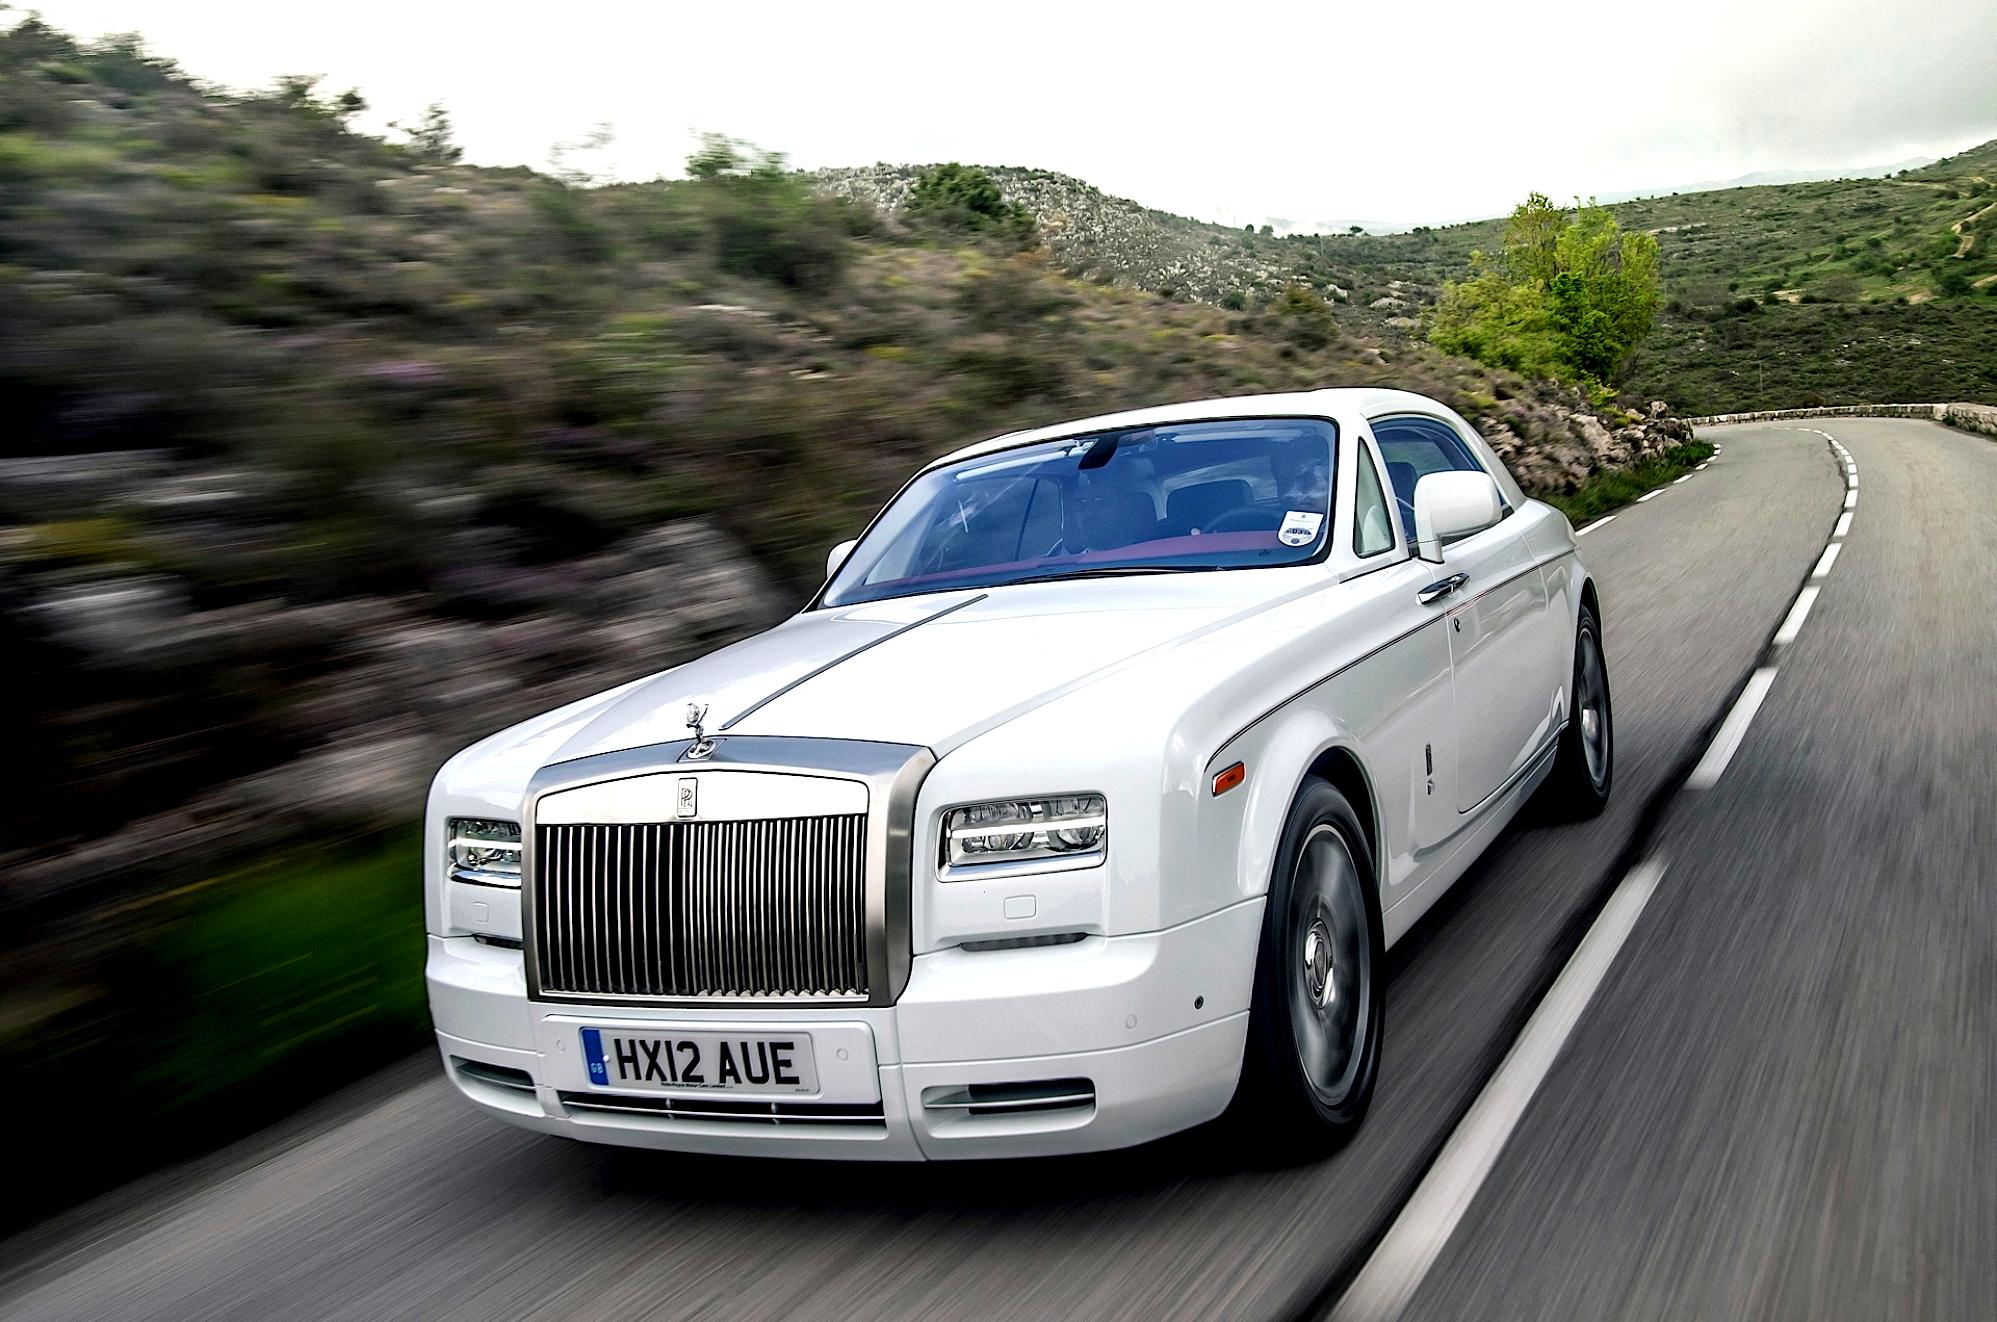 Rolls-Royce Phantom Coupe 2008 #107